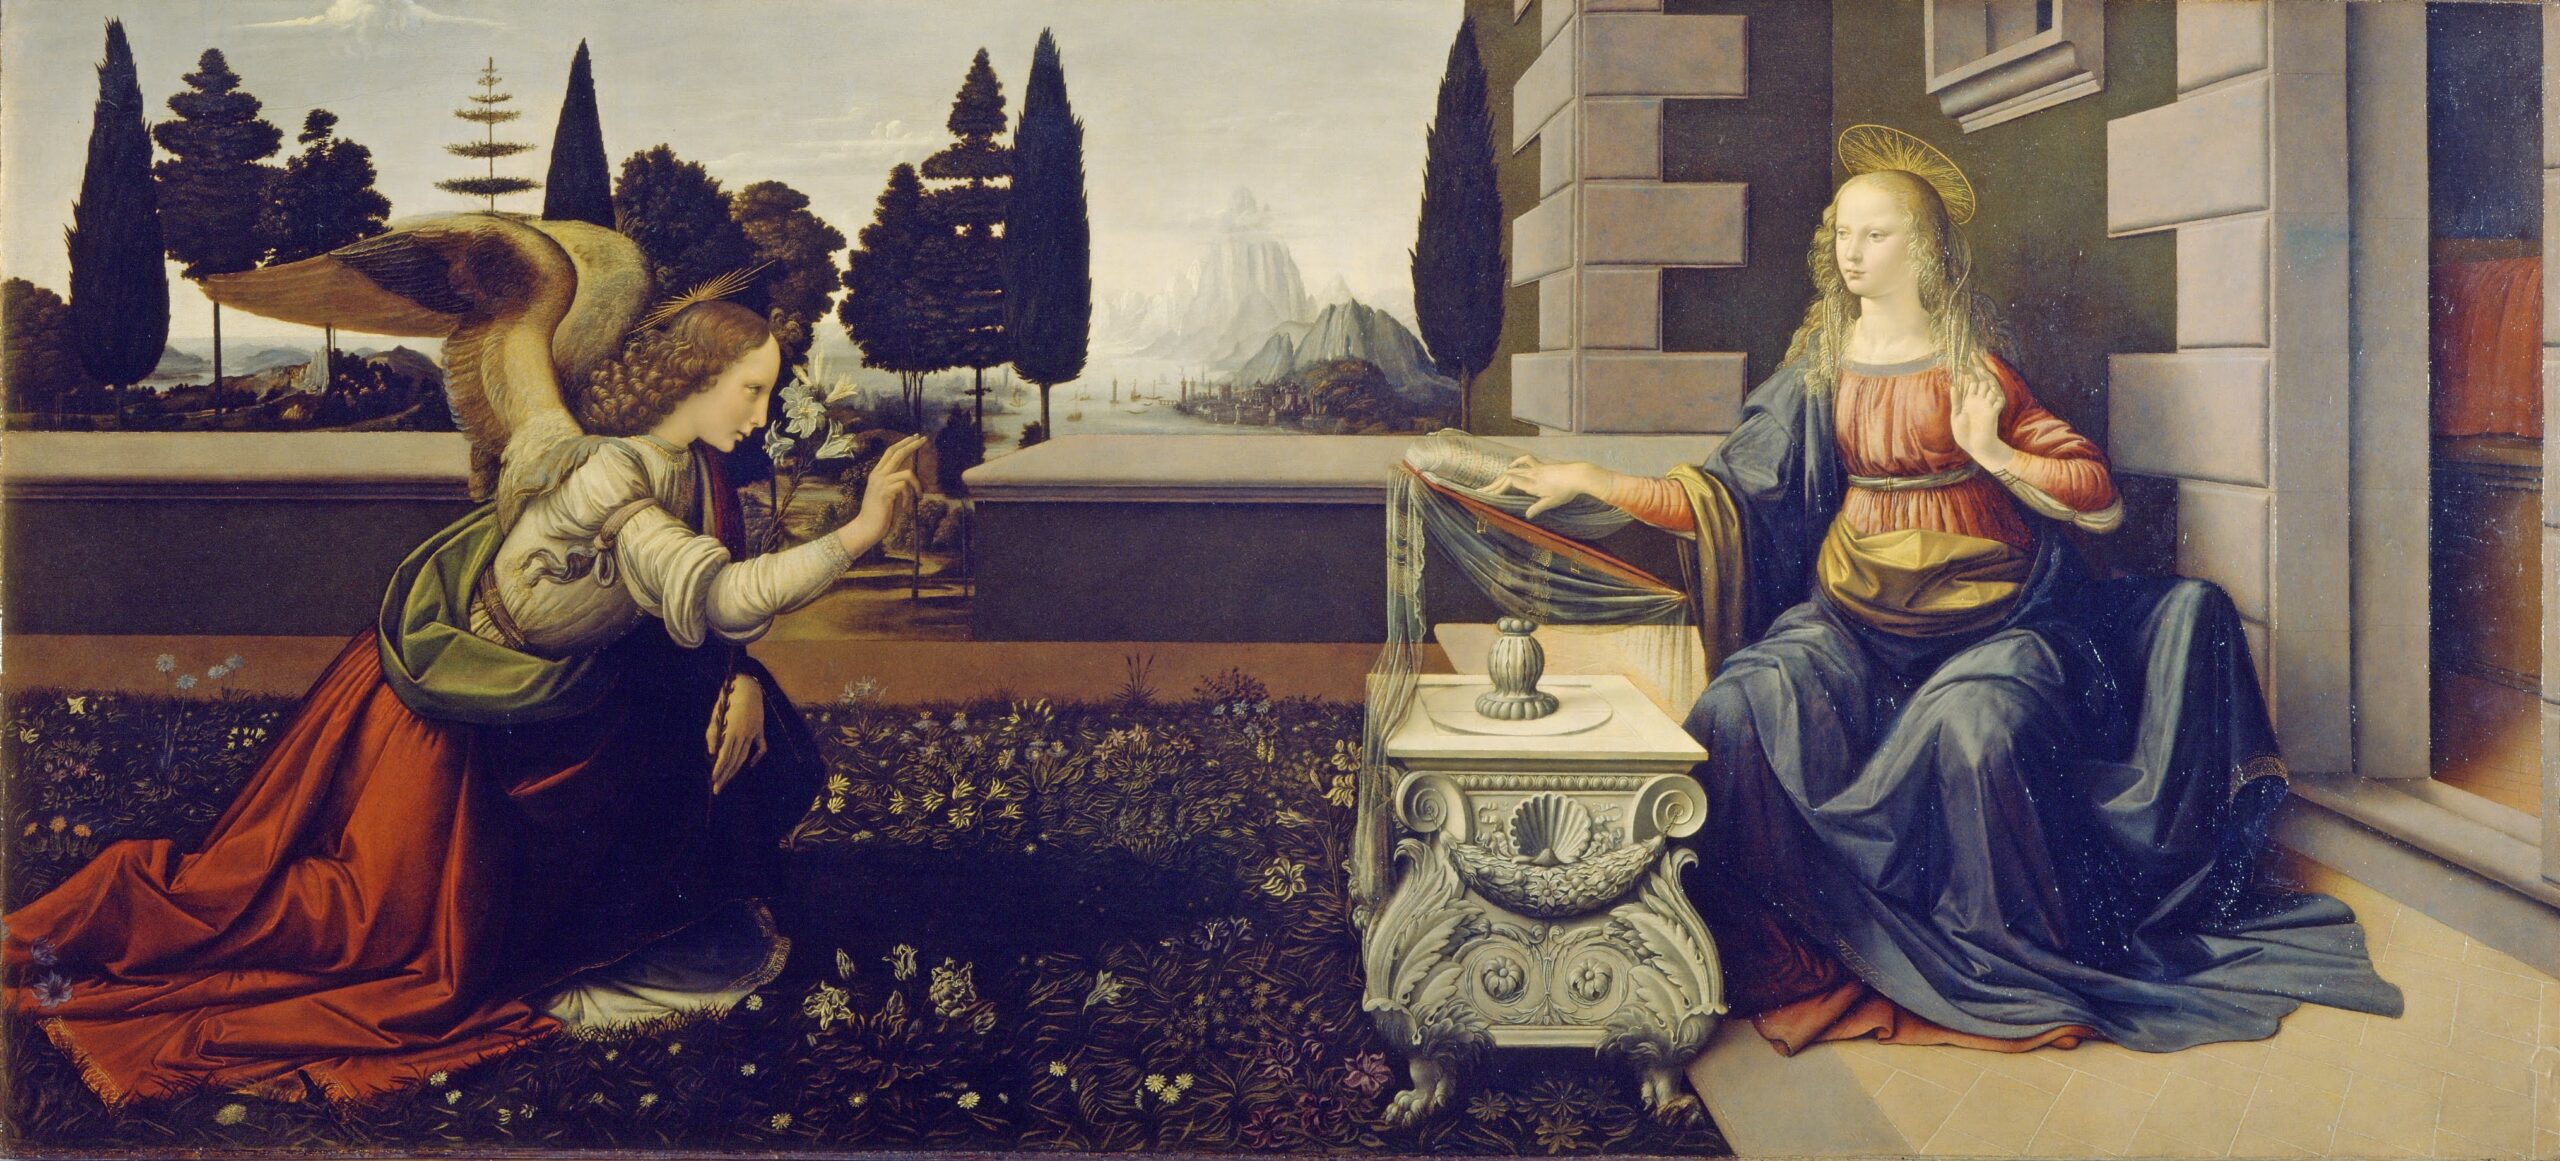 The Annunciation - Leonardo Da Vinci